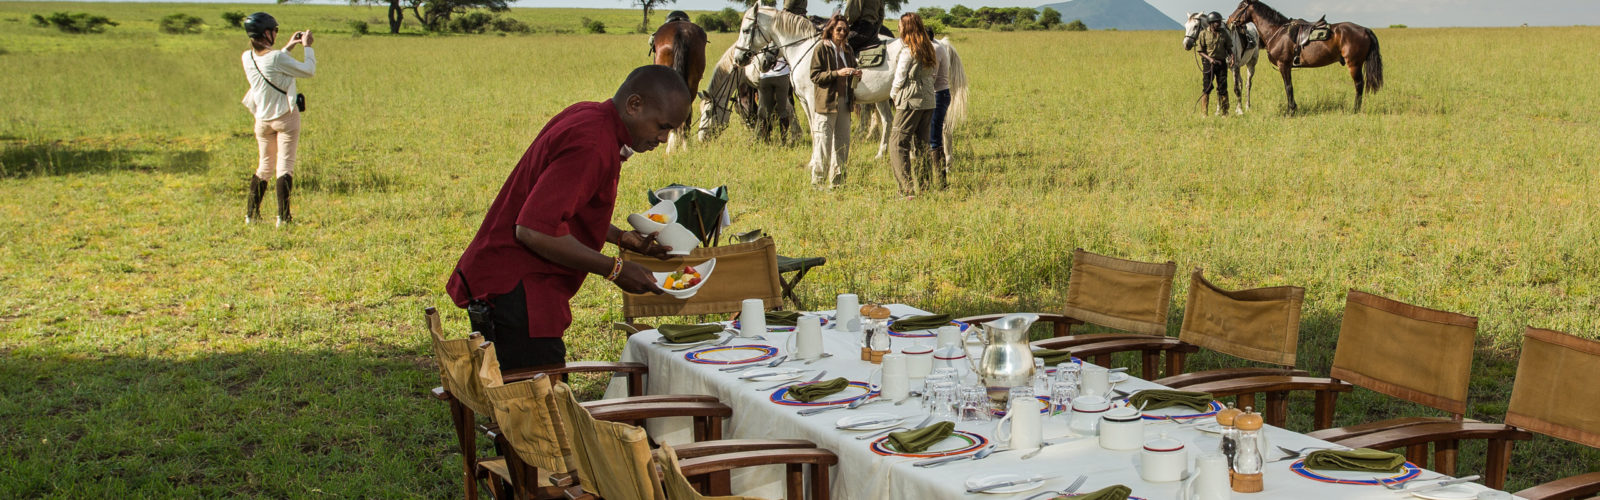 Breakfast on the plains at Ol Donyo Lodge, Kenya